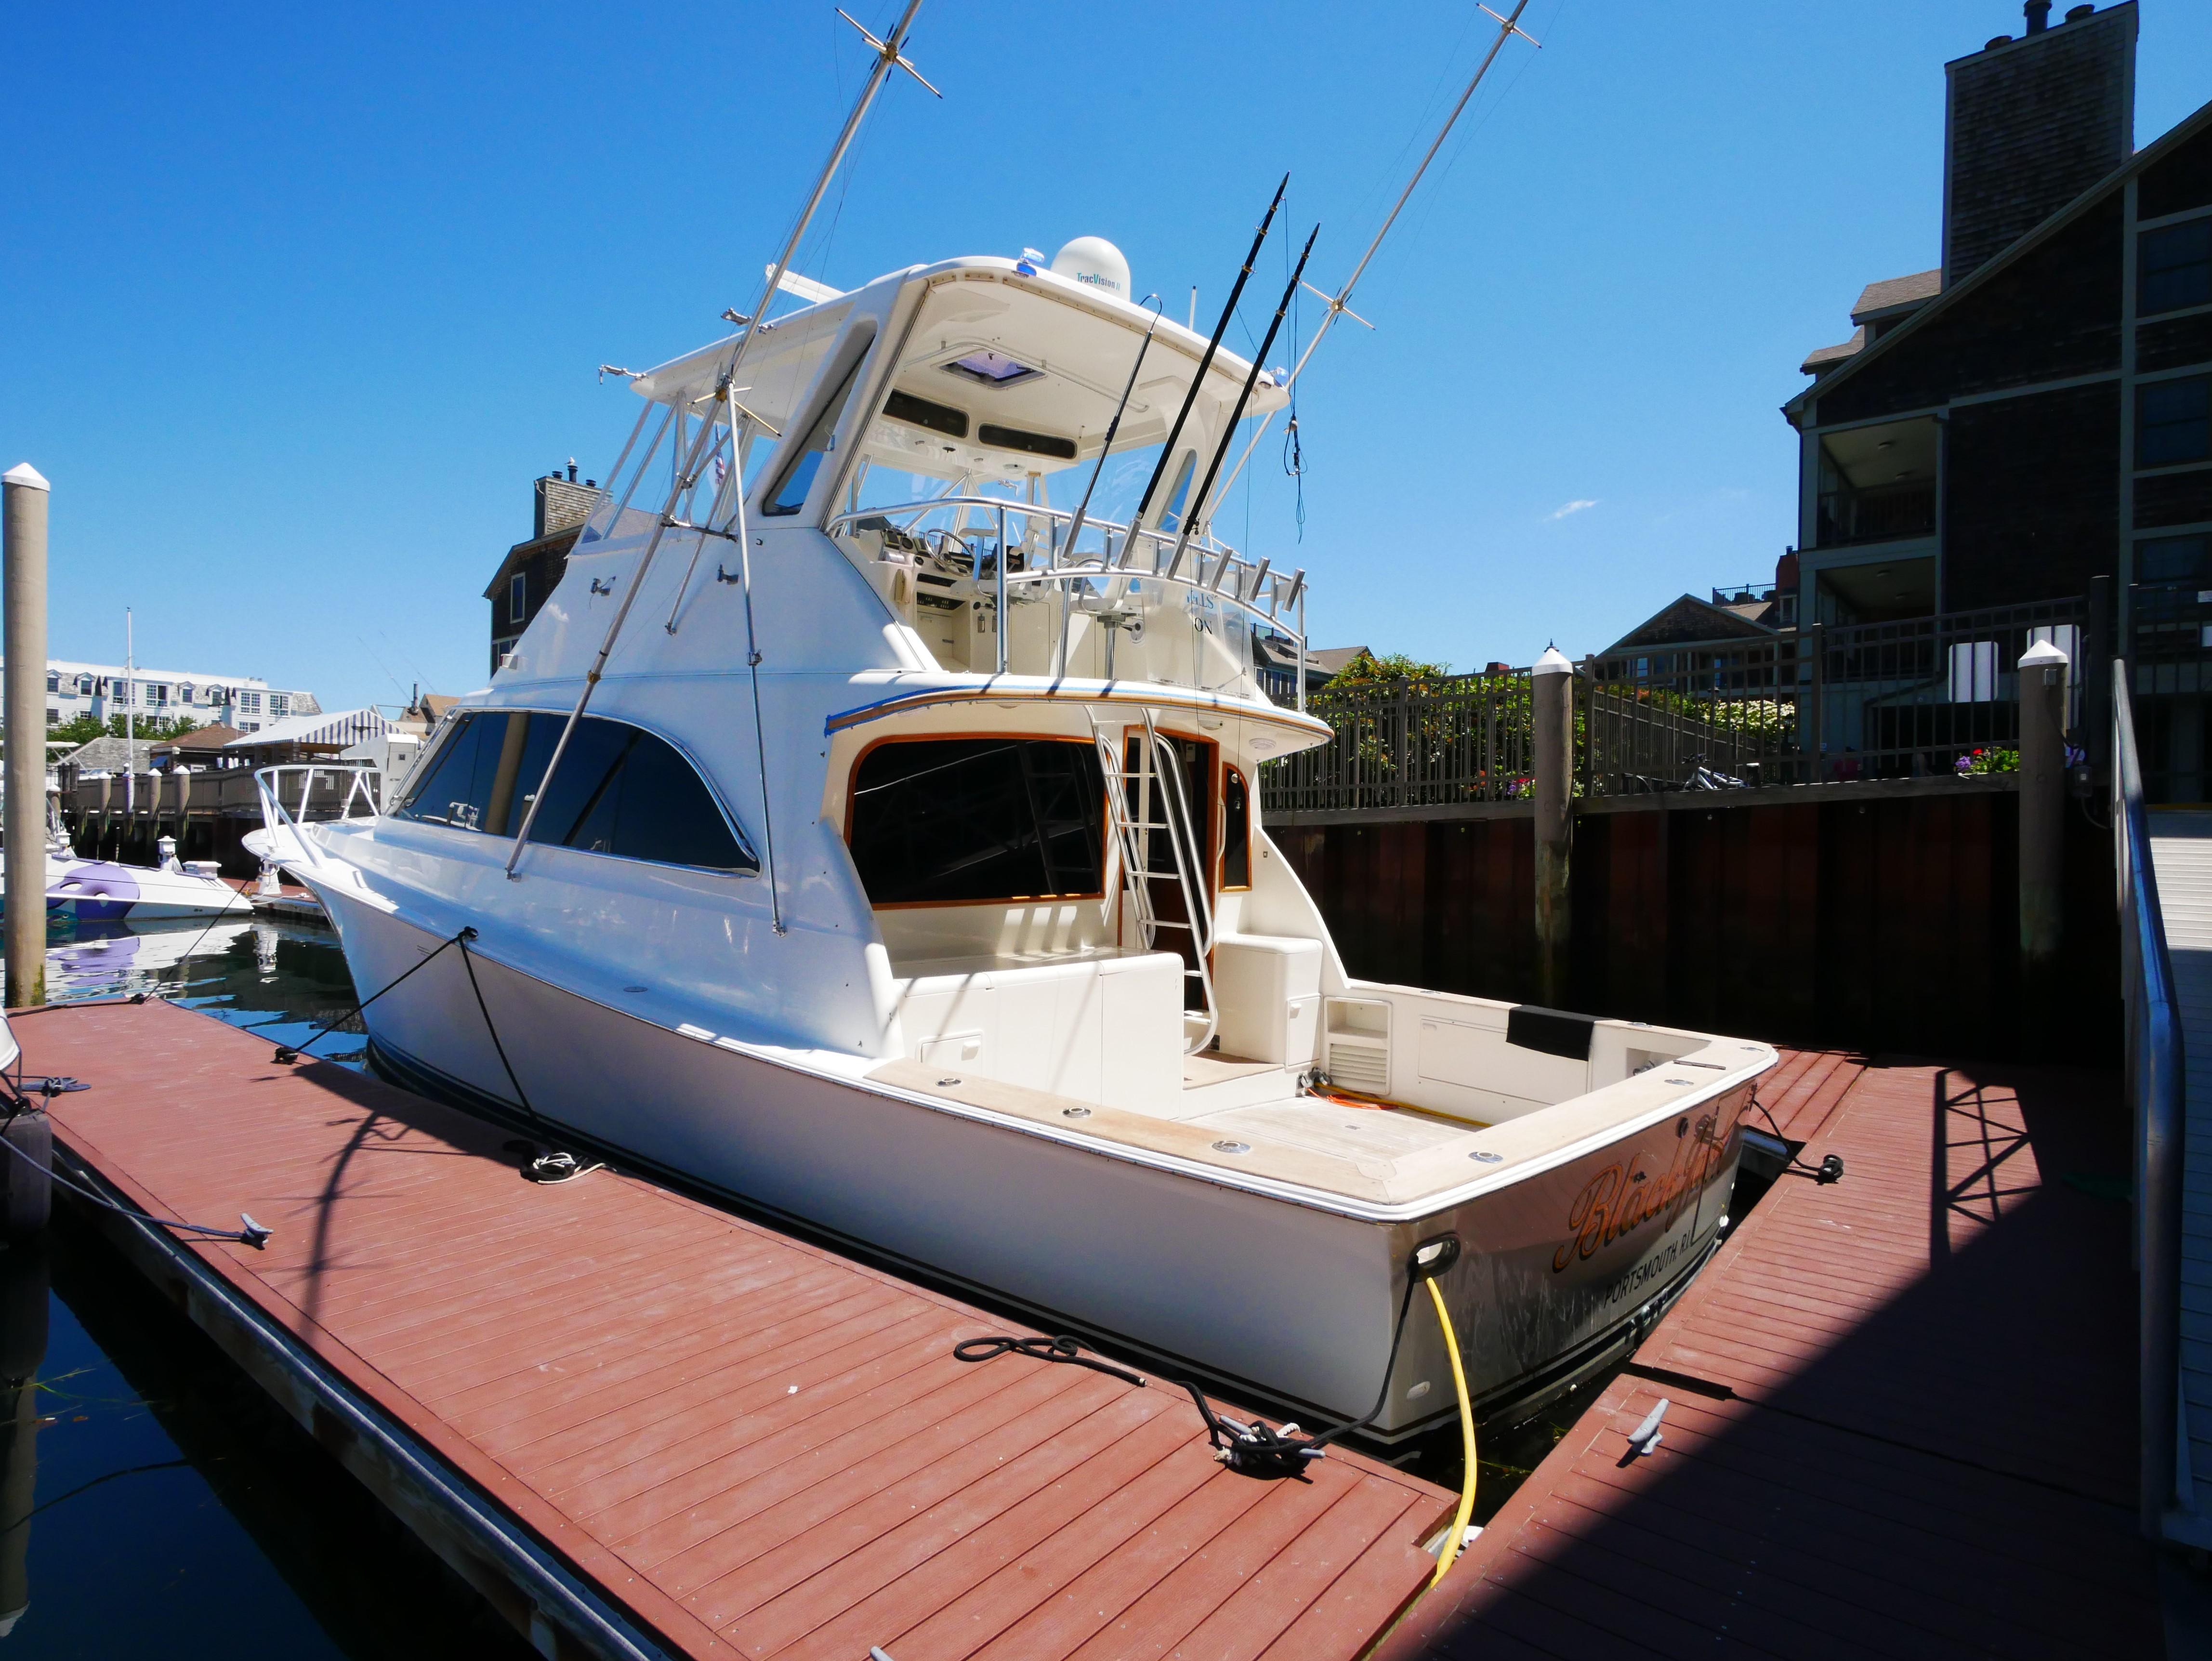 53 ft ocean yacht for sale